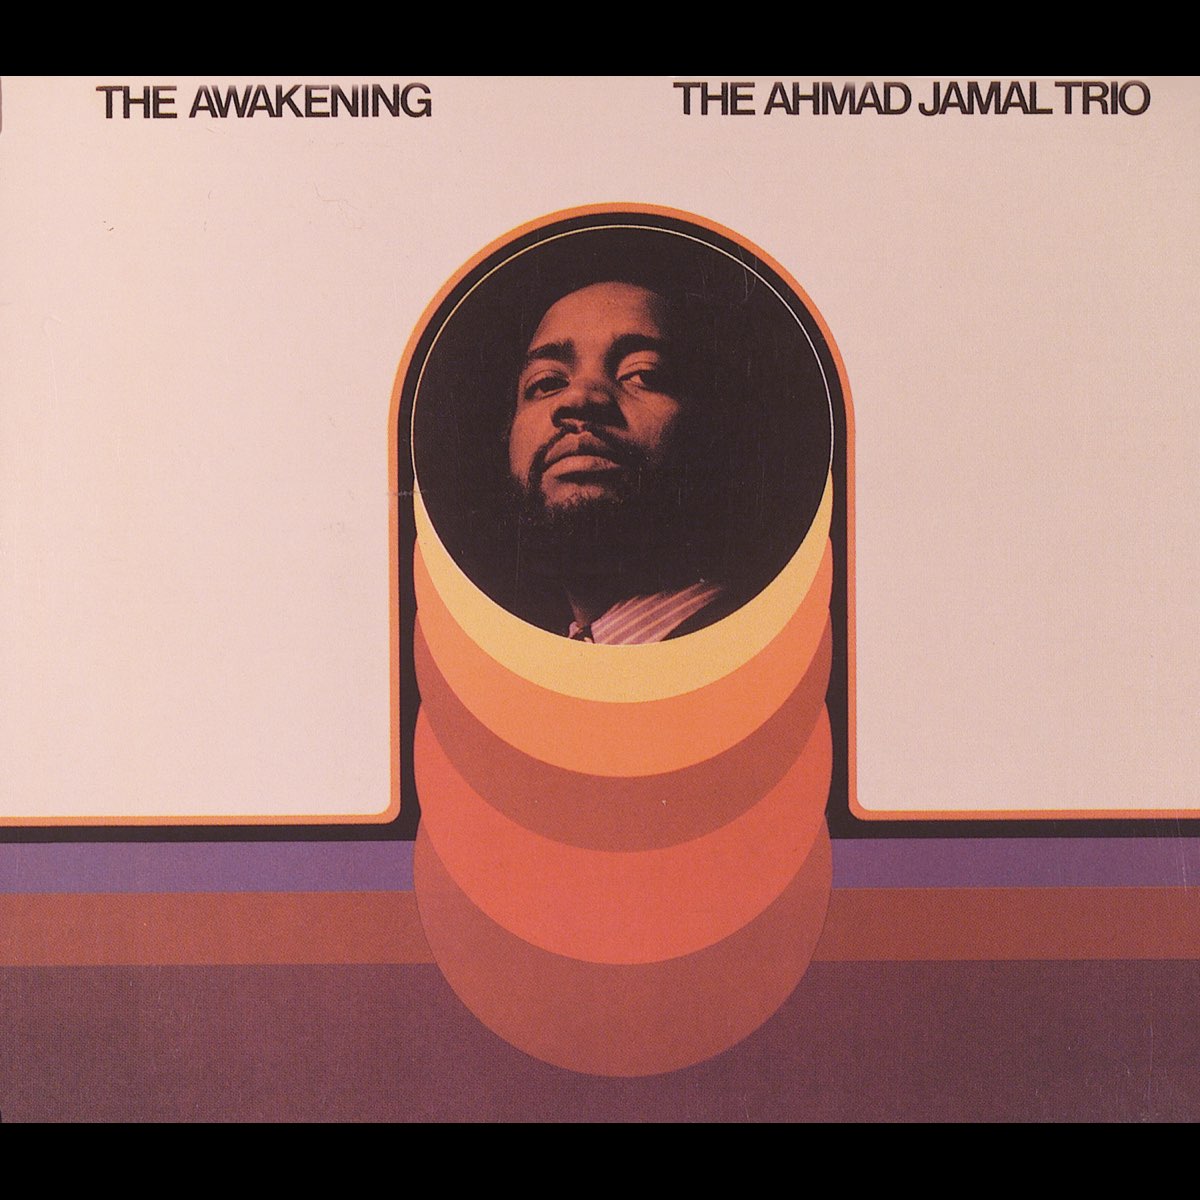 AHMAD JAMAL TRIO THE AWAKENING LP レコードkatosanrecord